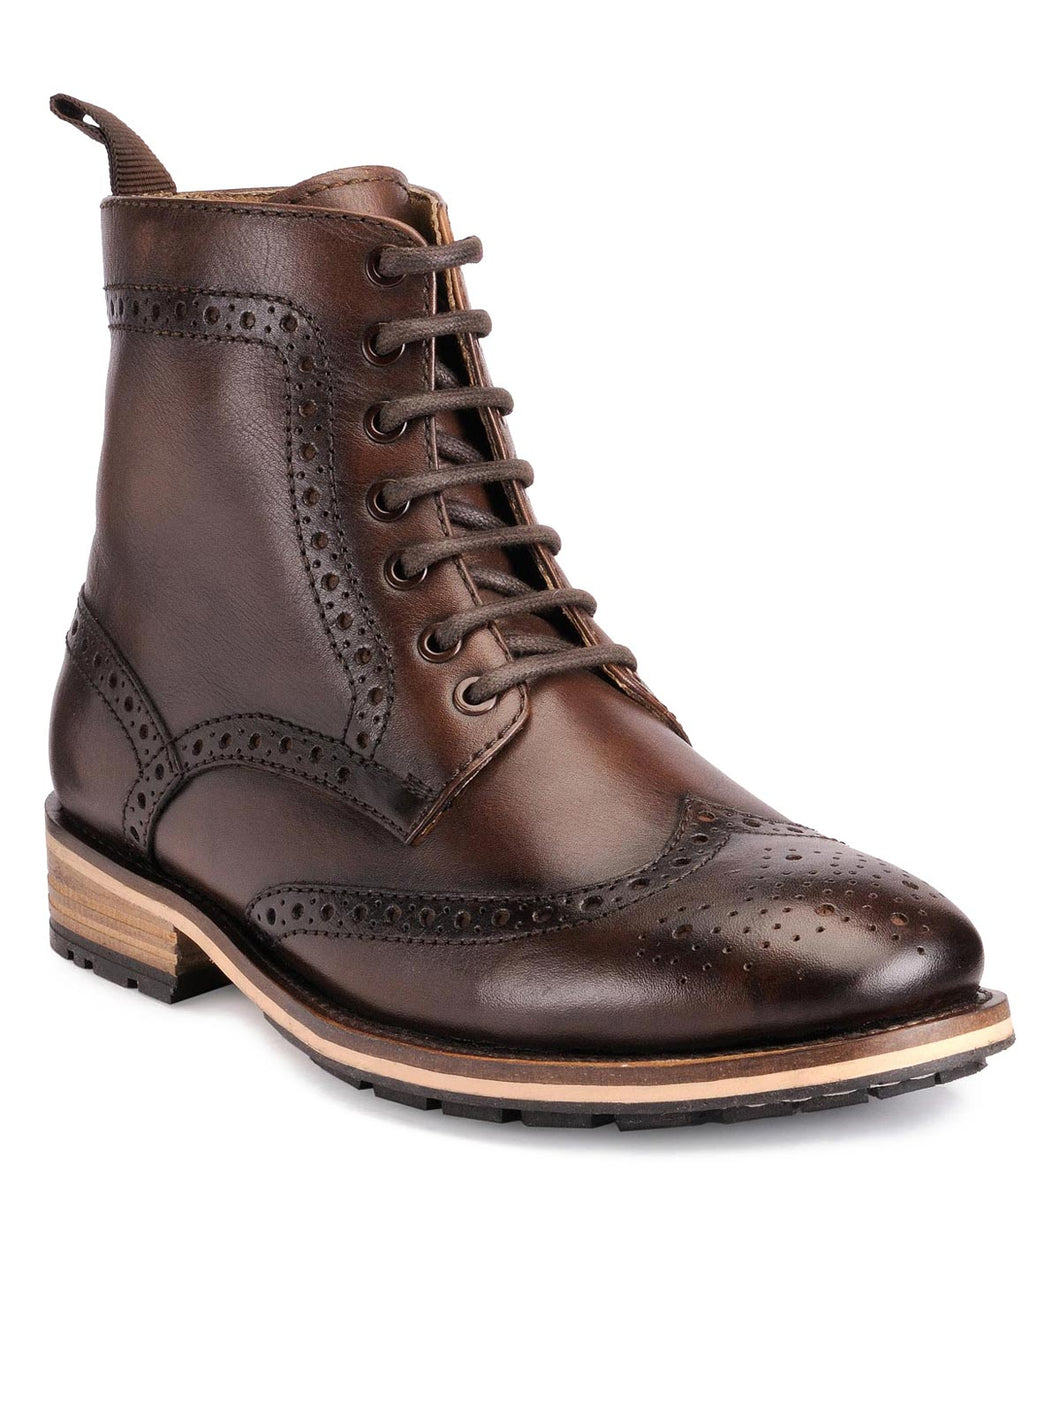 teakwood-genuine-leather-mens-boots-sh-mj-36-t-moro